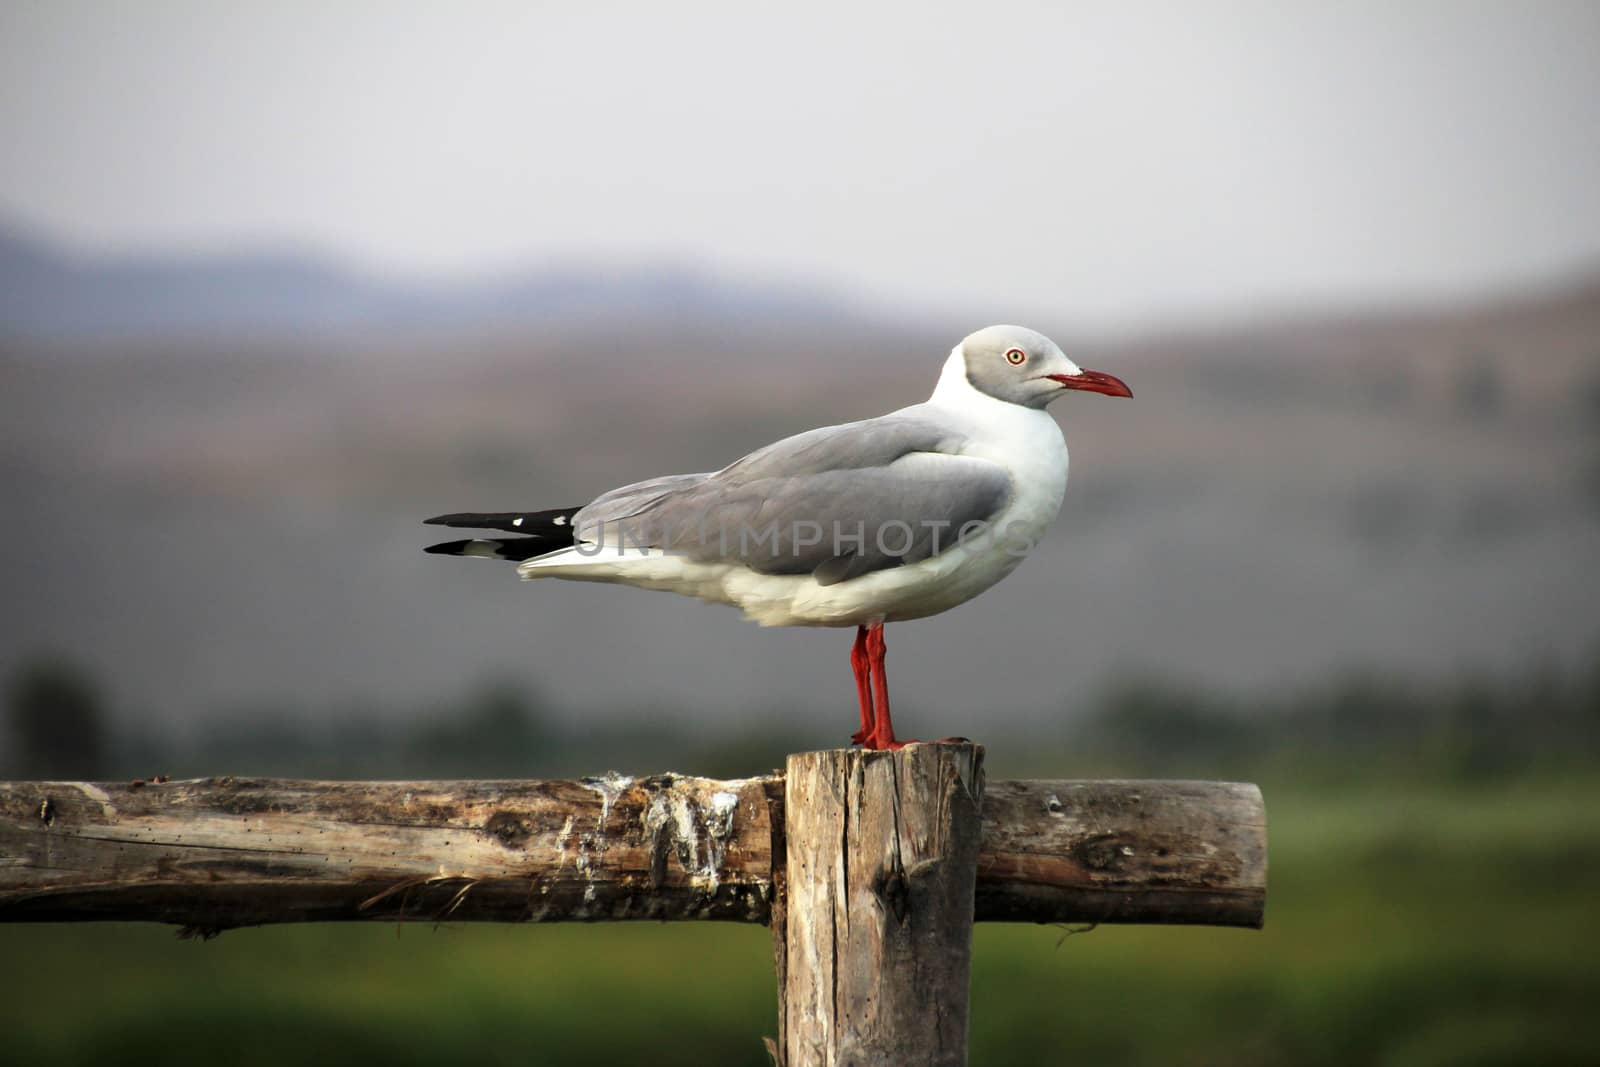 Grey headed seagull sitting on fence at laguna mejia Peru, nice red beak